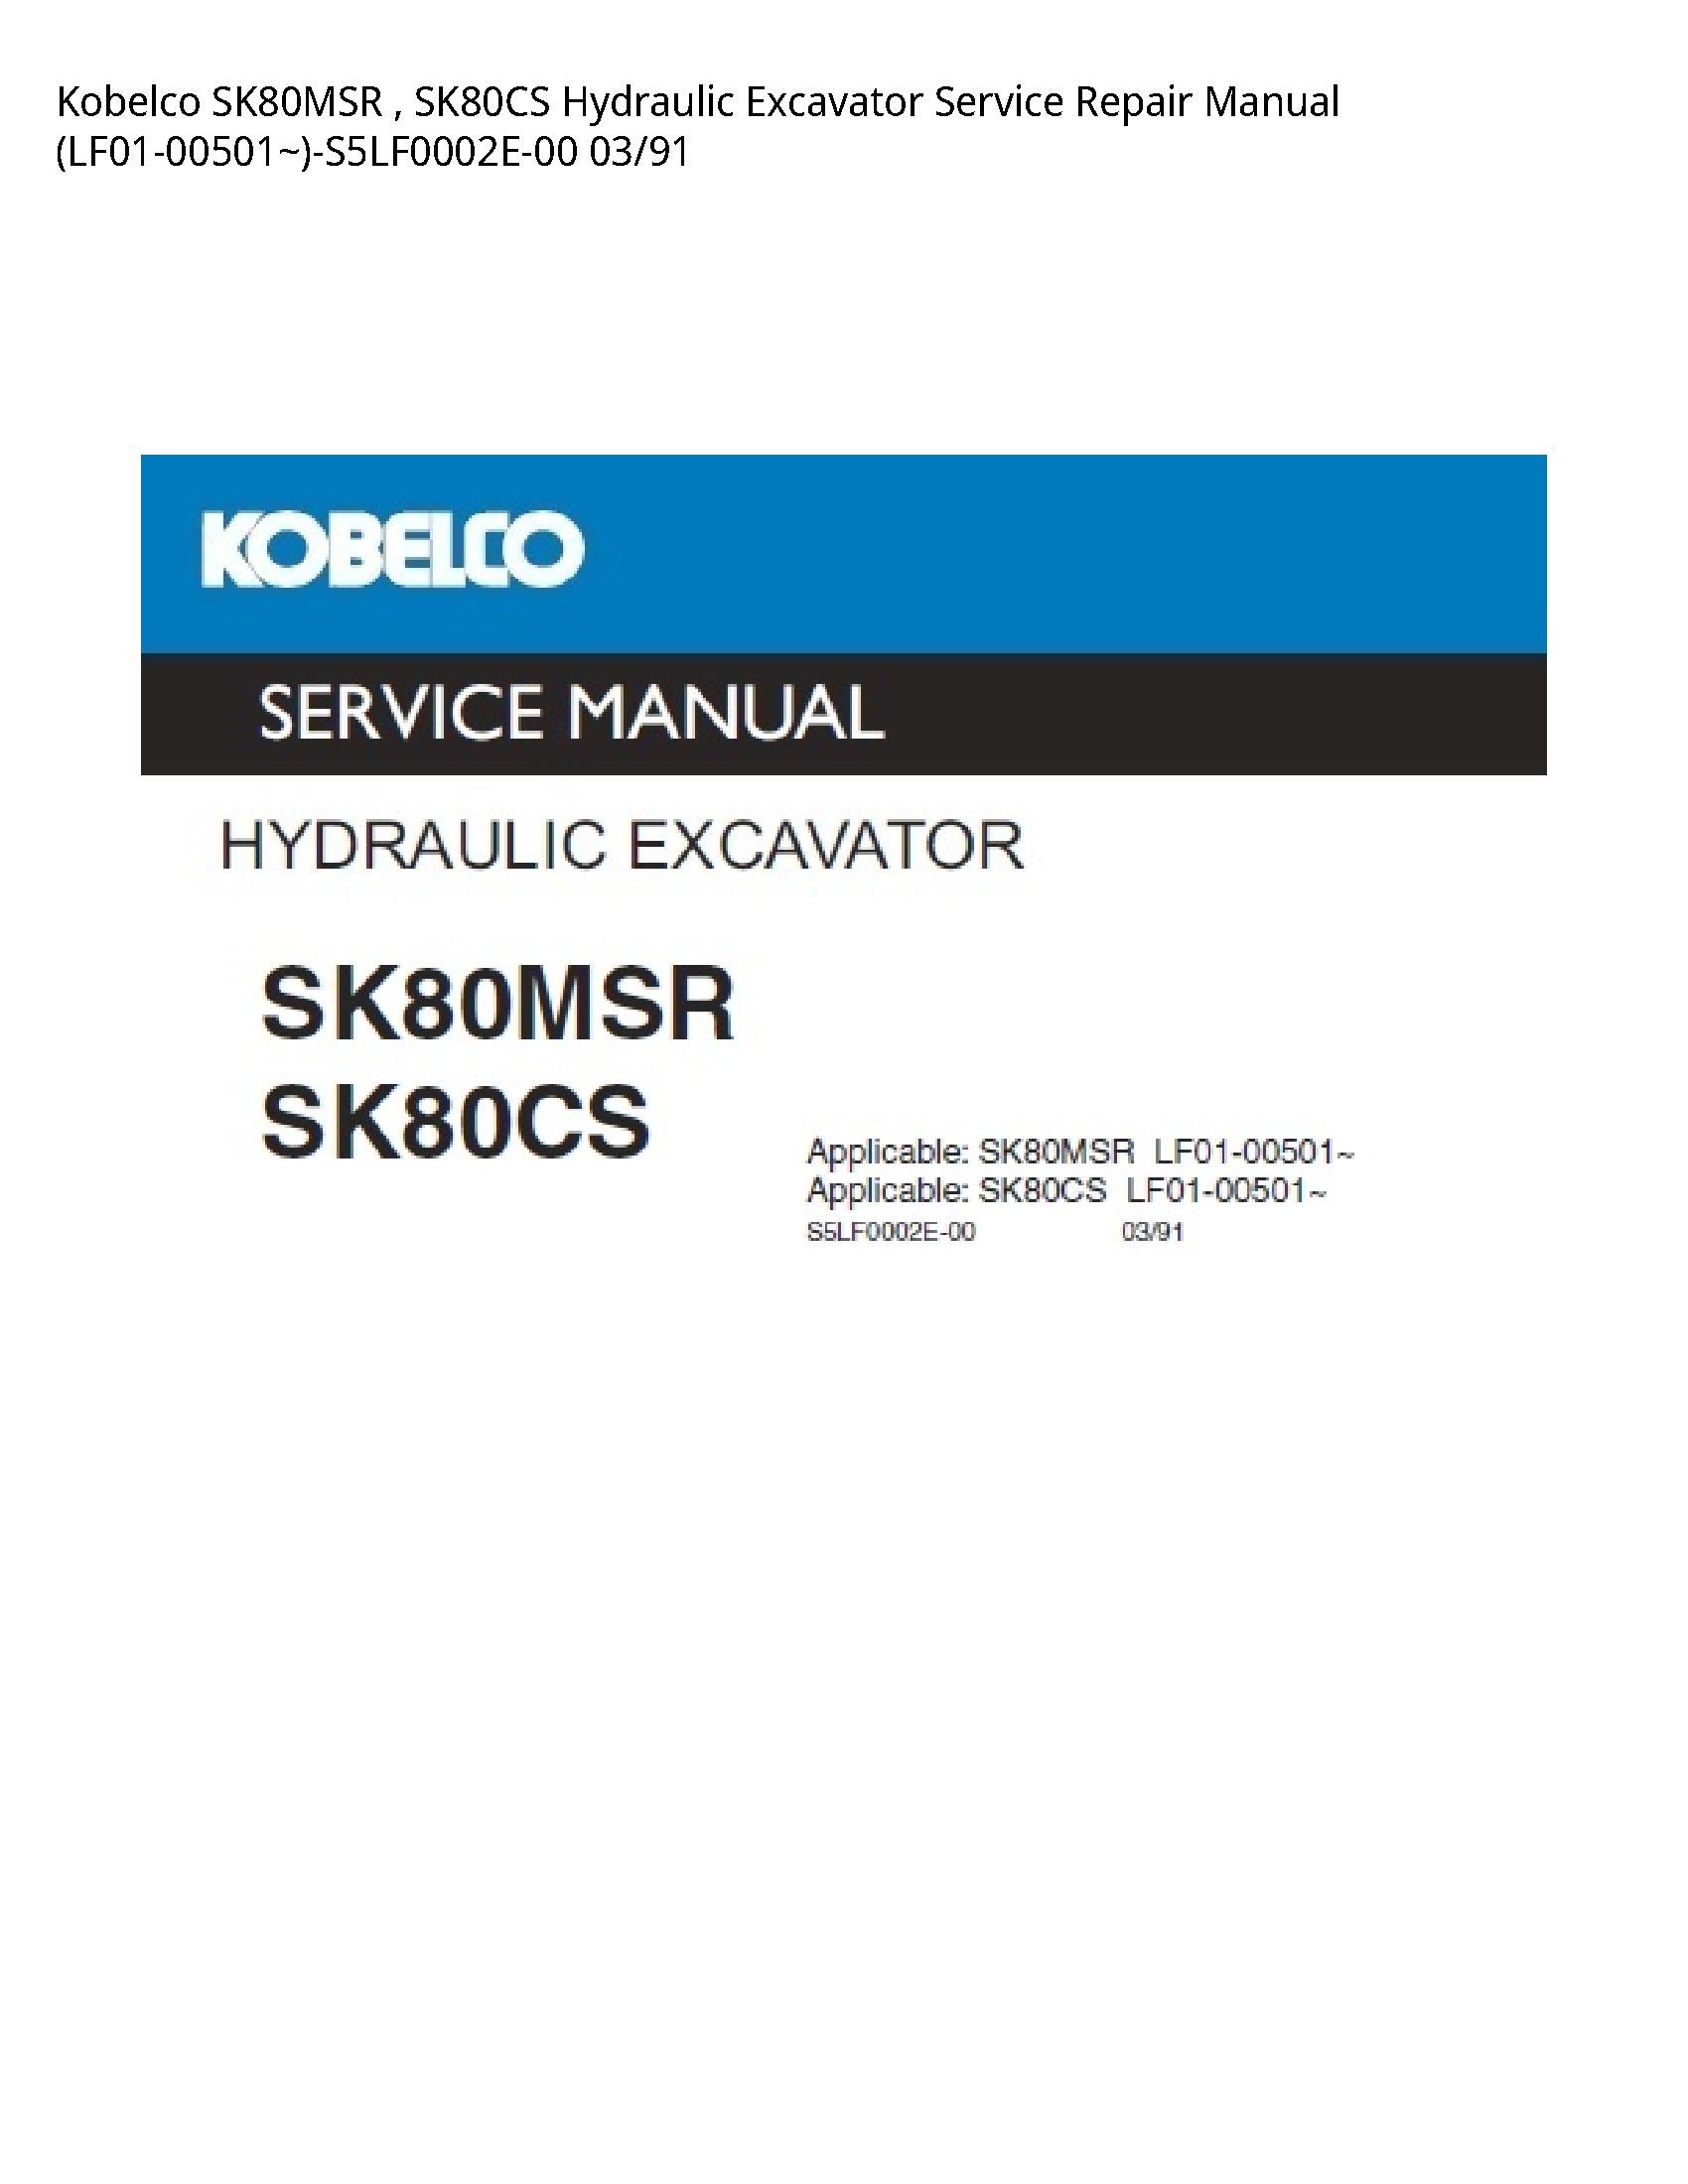 Kobelco SK80MSR Hydraulic Excavator manual